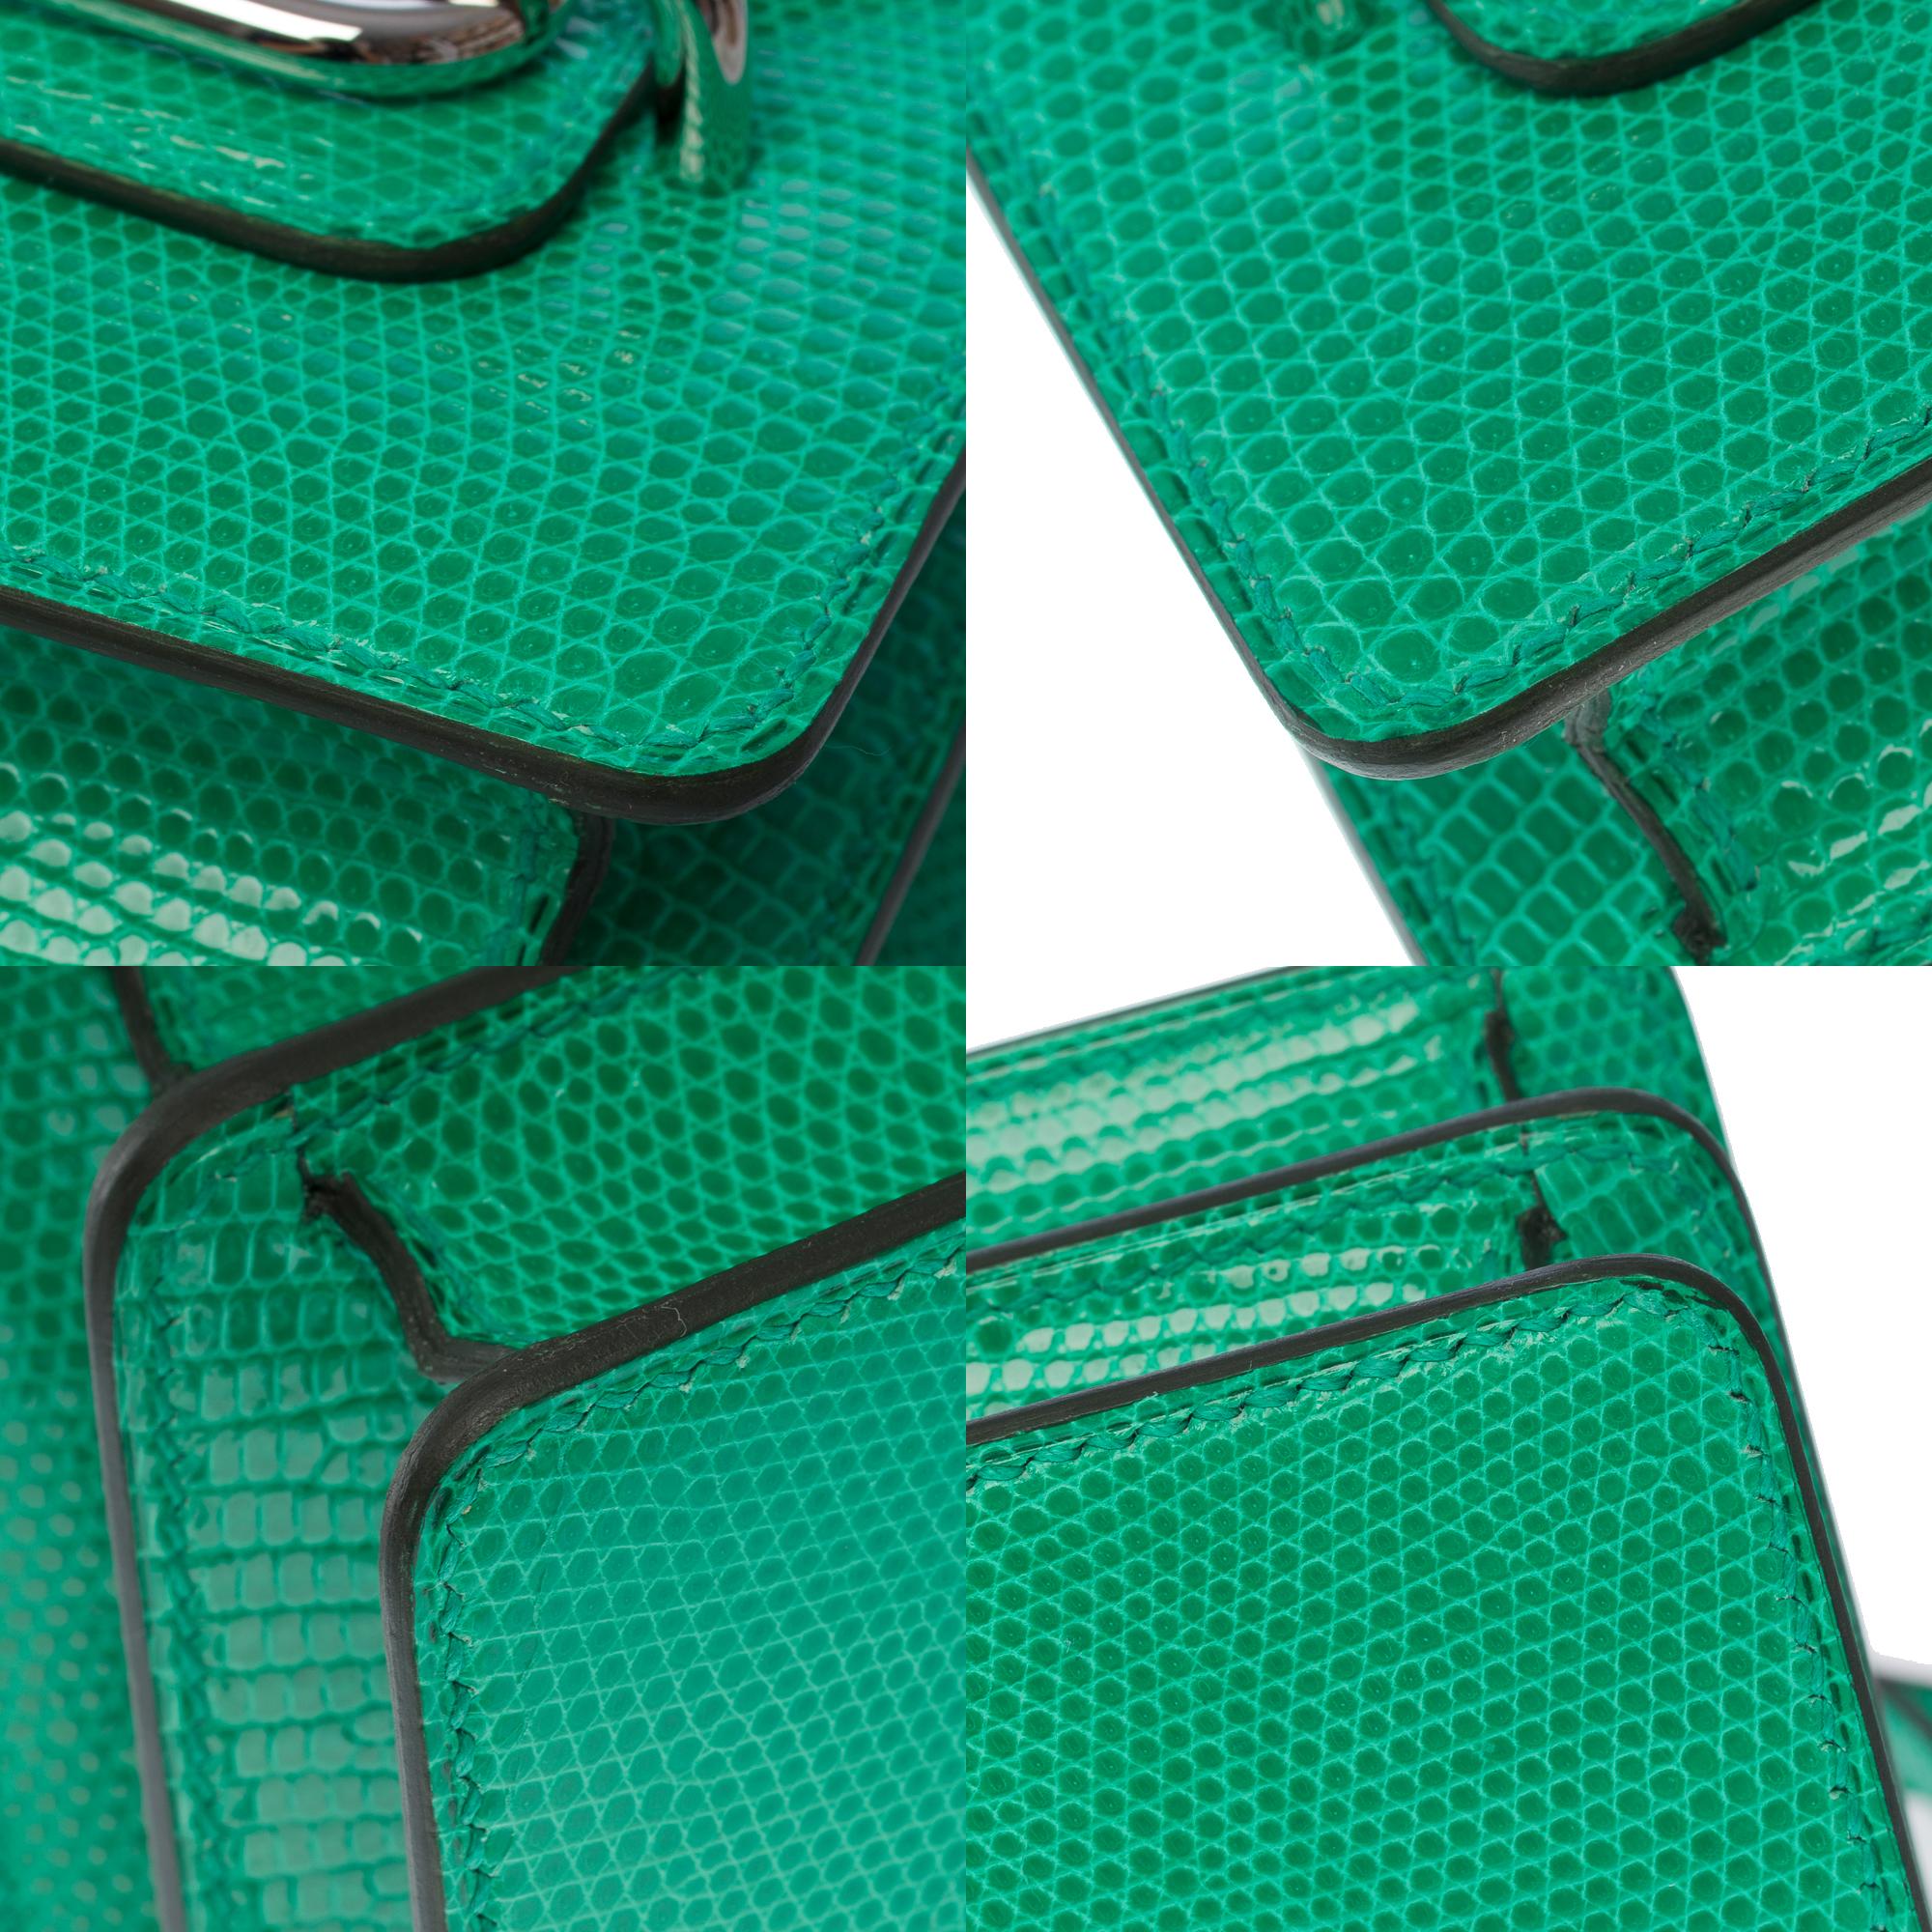 New Amazing Hermès Roulis 18 shoulder bag in mint green lizard, SHW For Sale 8